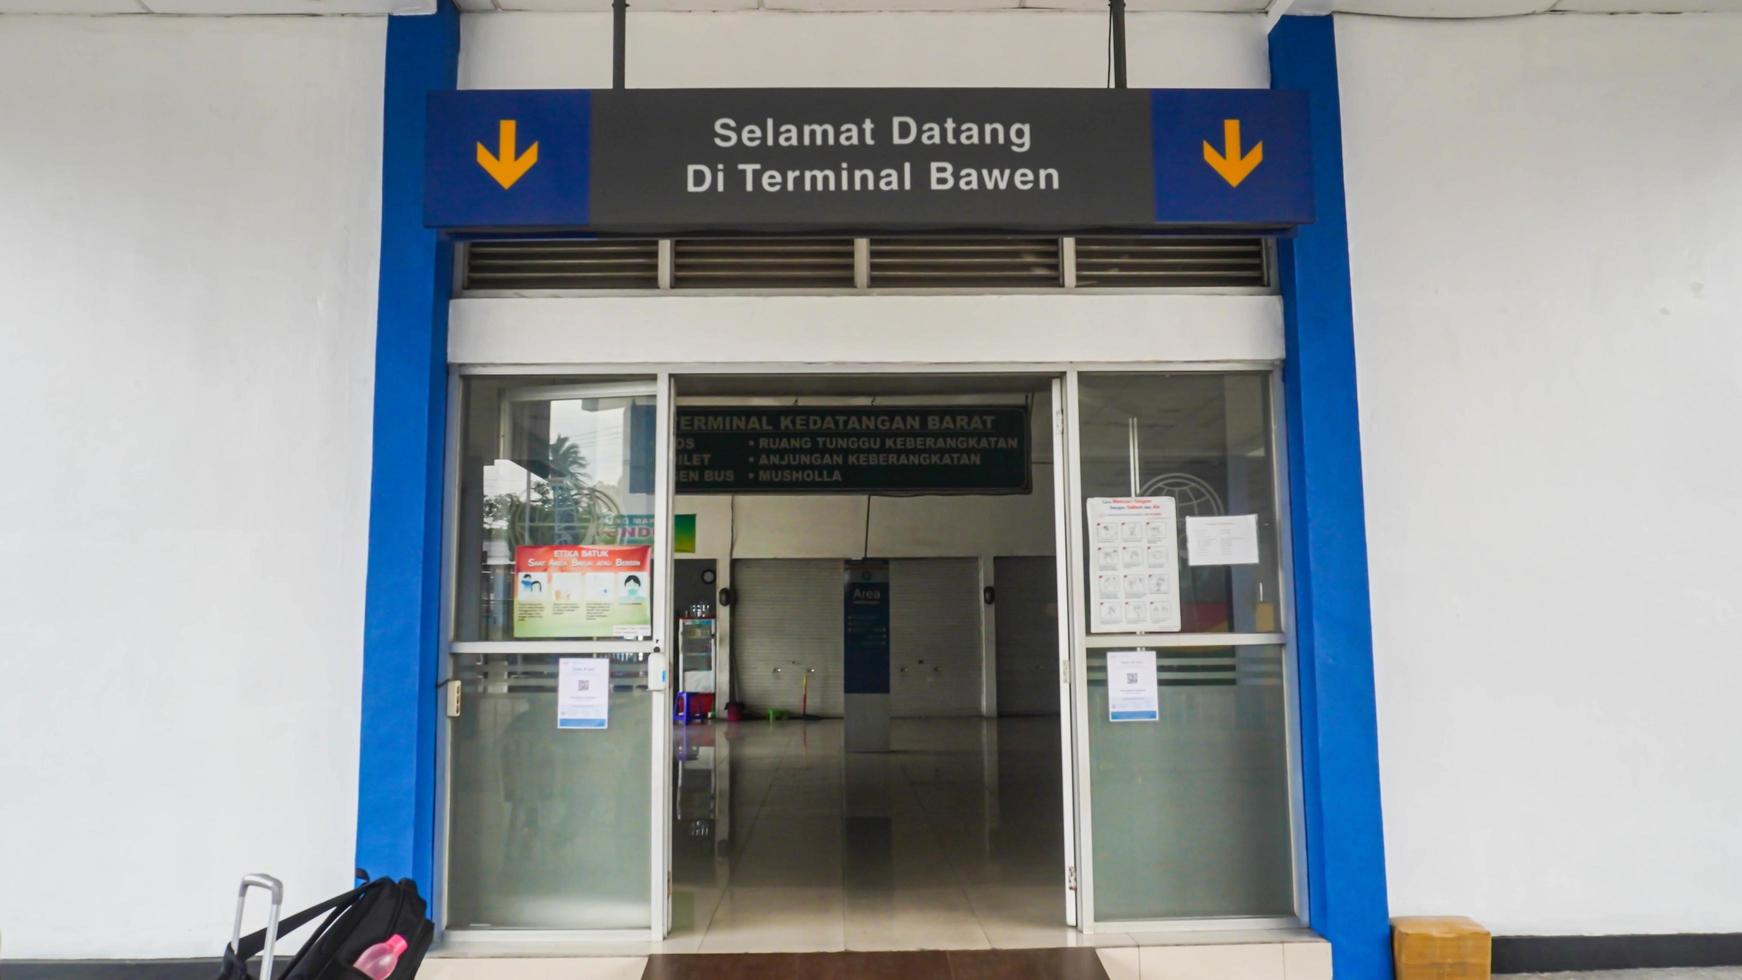 semarang, centrala java, indonesien, 2021 - bawen terminalentré foto